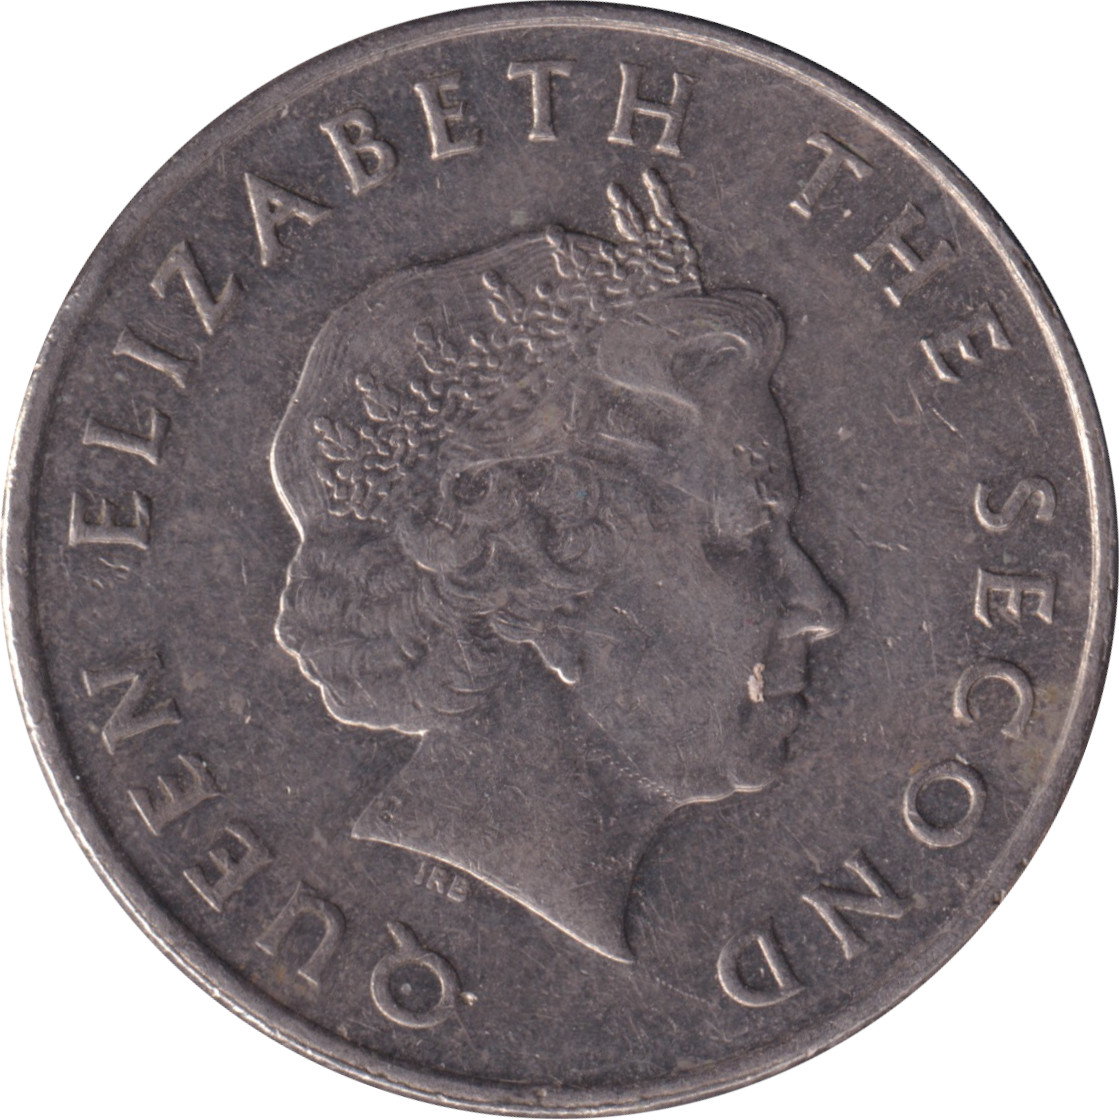 25 cents - Elizabeth II - Old head